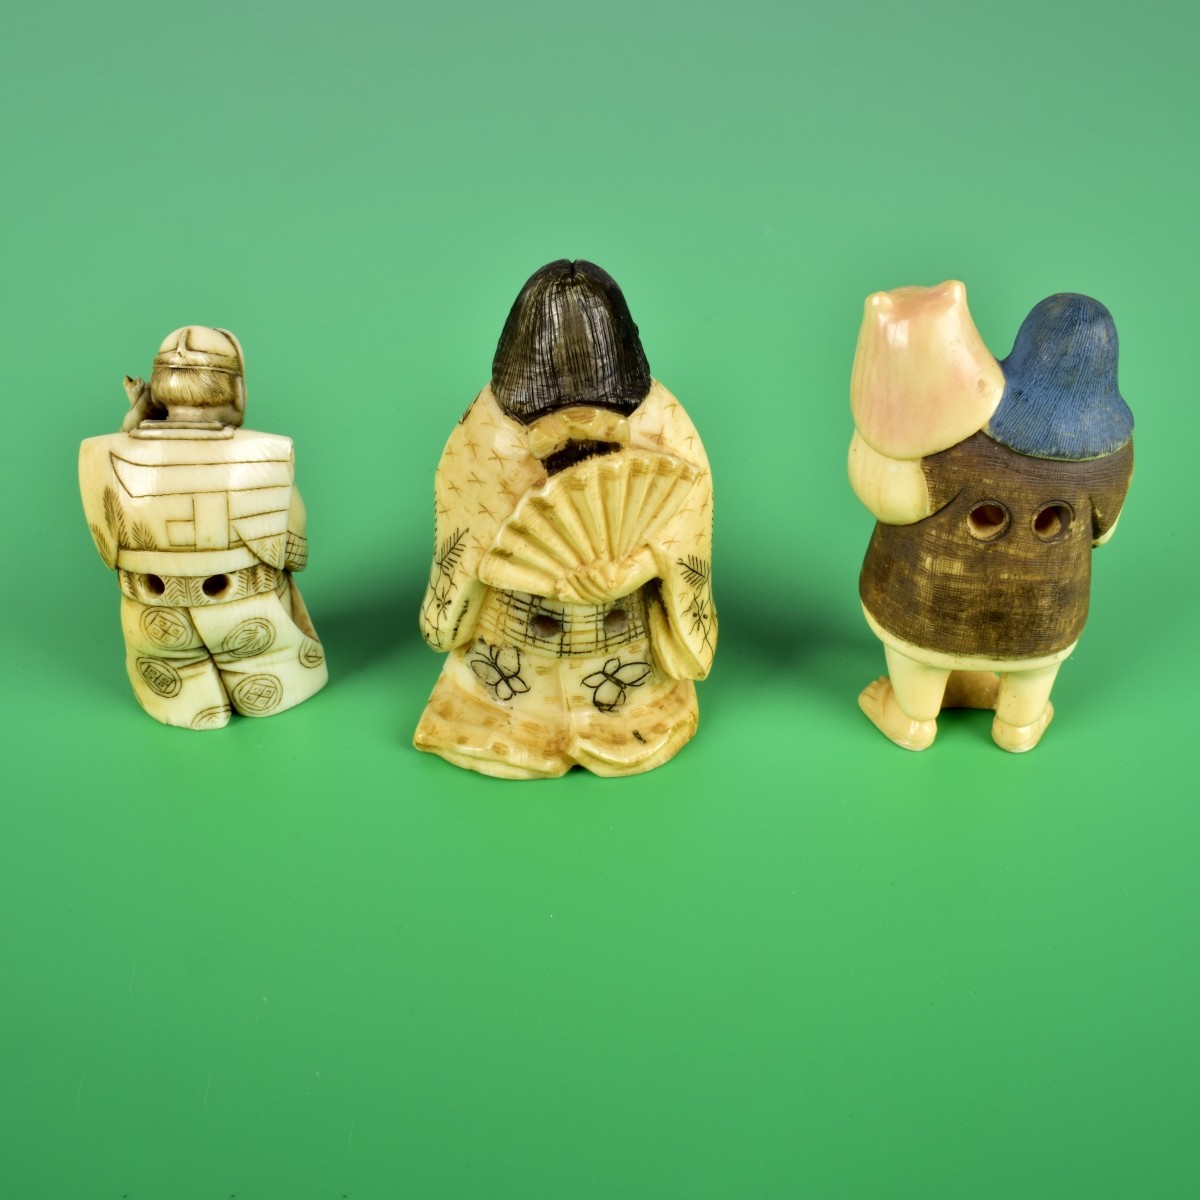 Three Antique Japanese Netsuke Figurines